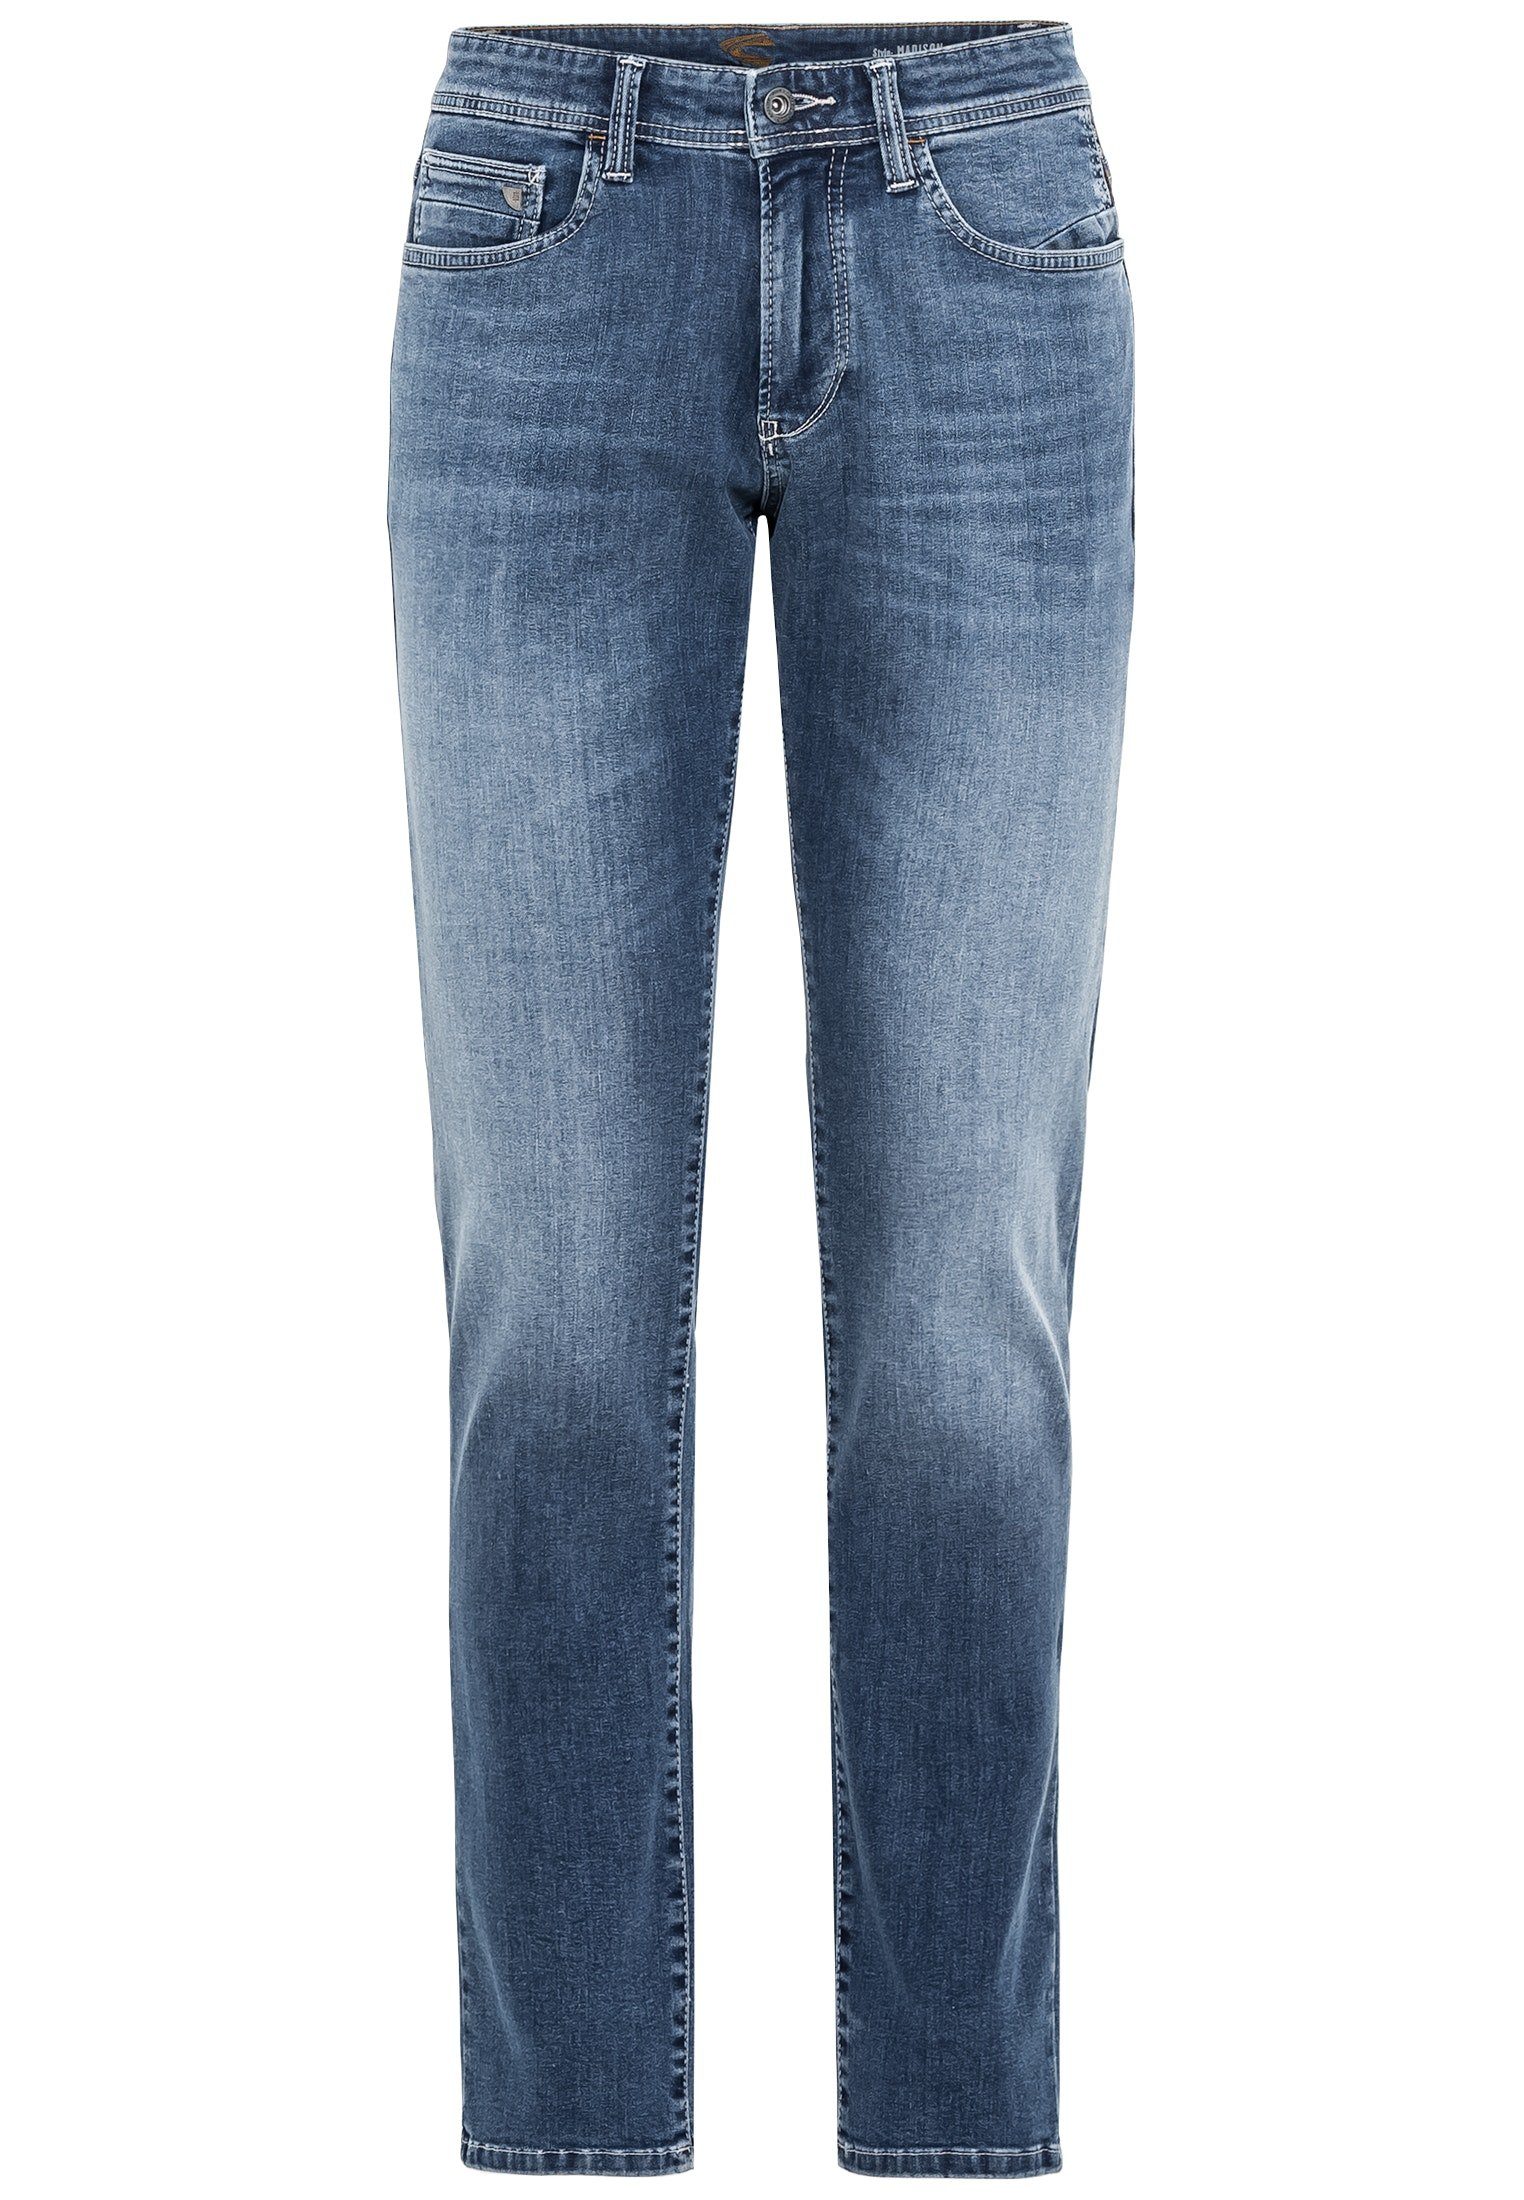 camel active 5-Pocket-Jeans »CAMEL ACTIVE MADISON mid blue 488775 9+79.84«  online kaufen | OTTO